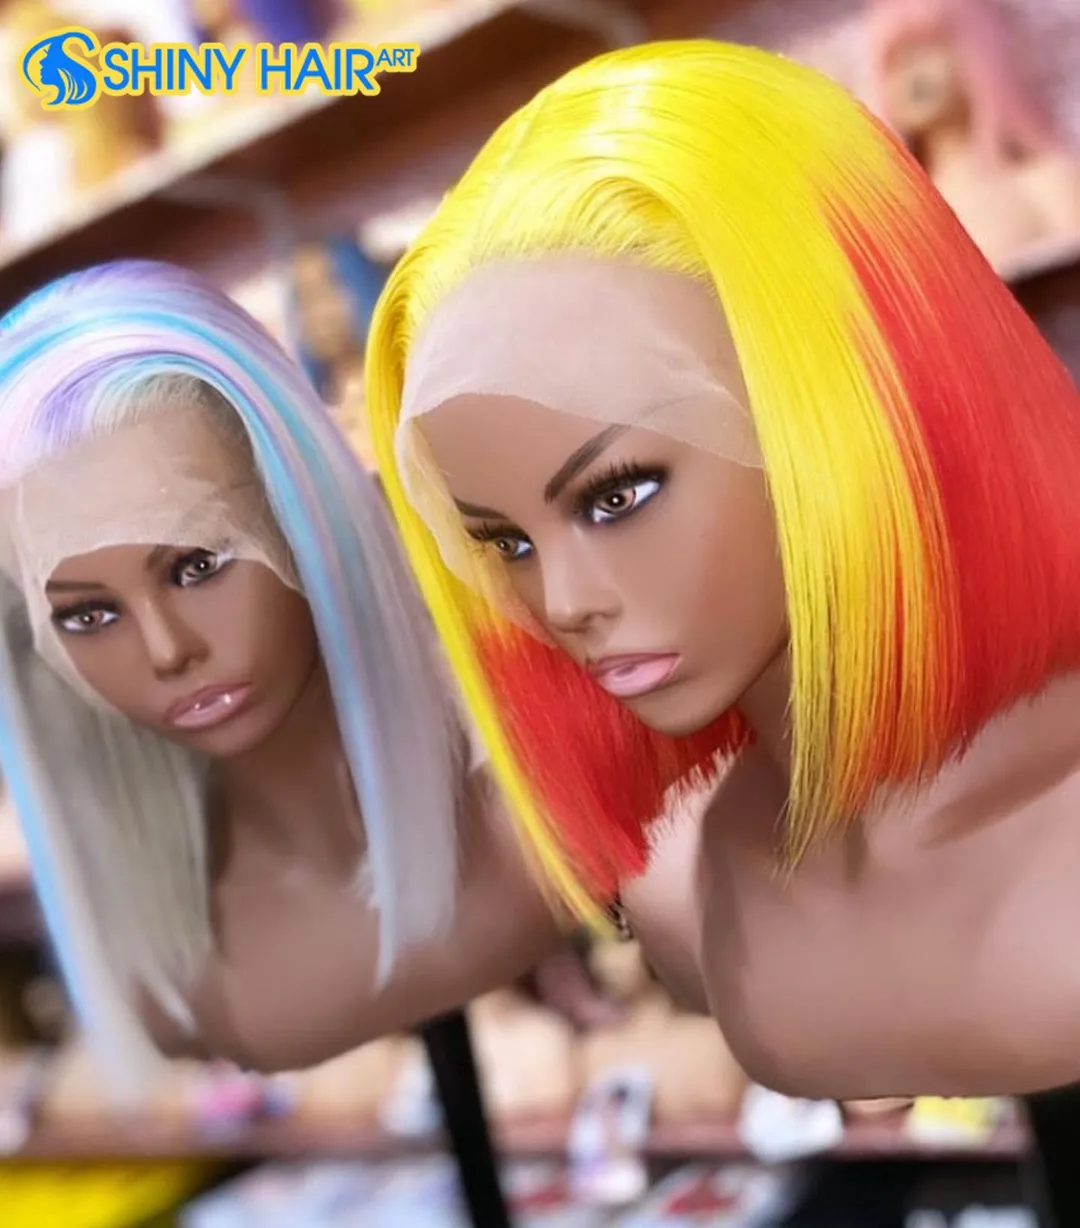 Colored Bob Lace Front Human Hair Wigs Brazilian Virgin Hair Blonde Red Pink Blue Yellow Gray Orange Color Short Bob Cut Wigs